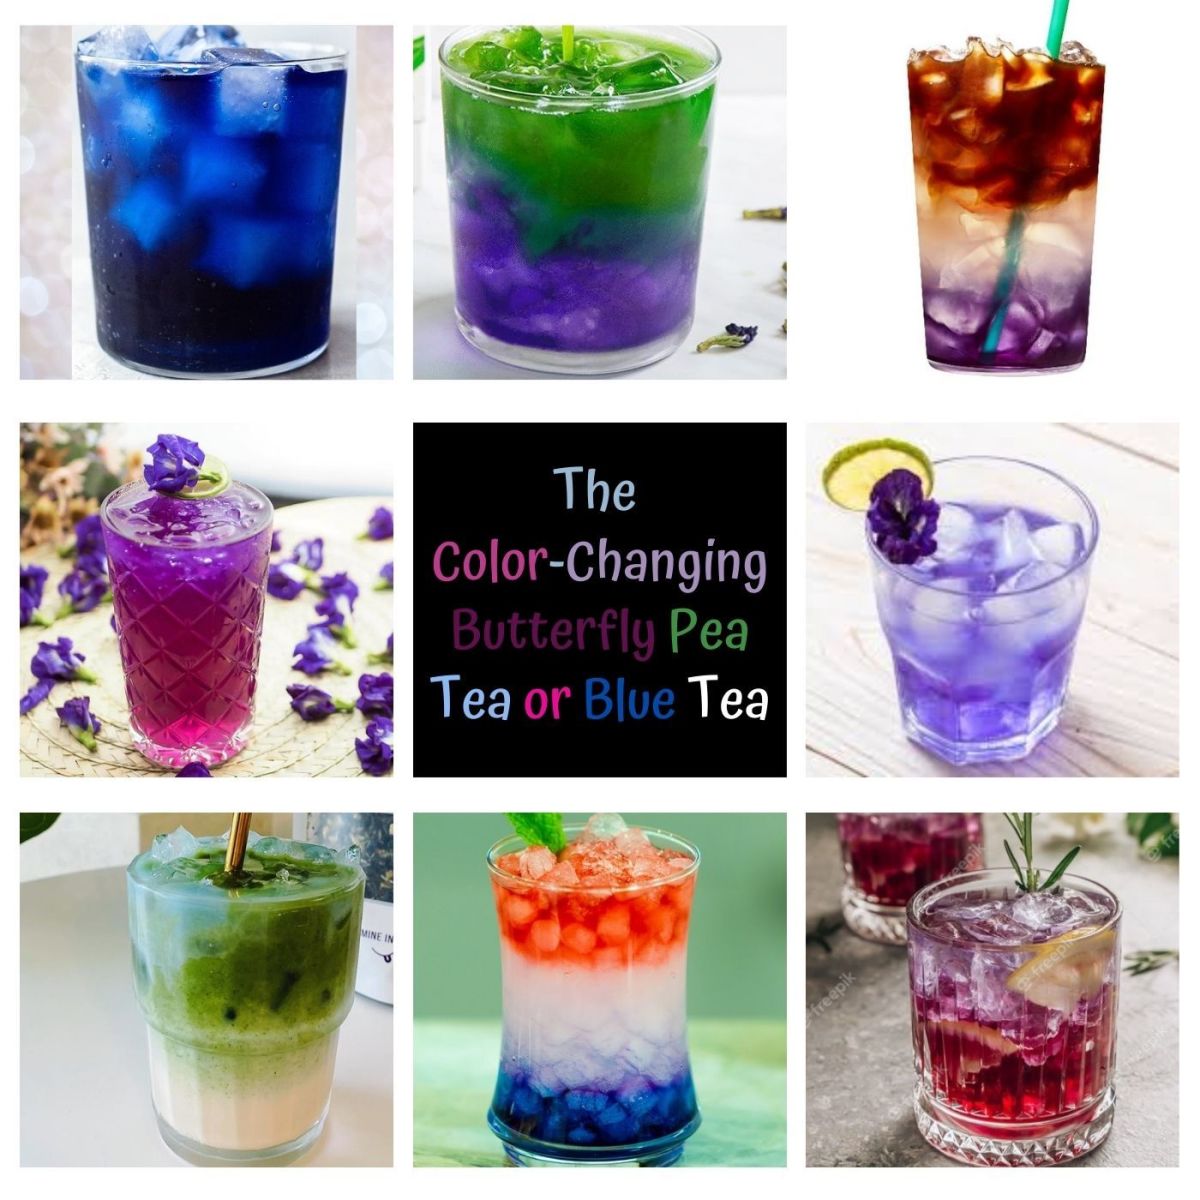 Blue Tea: The color-changing tea